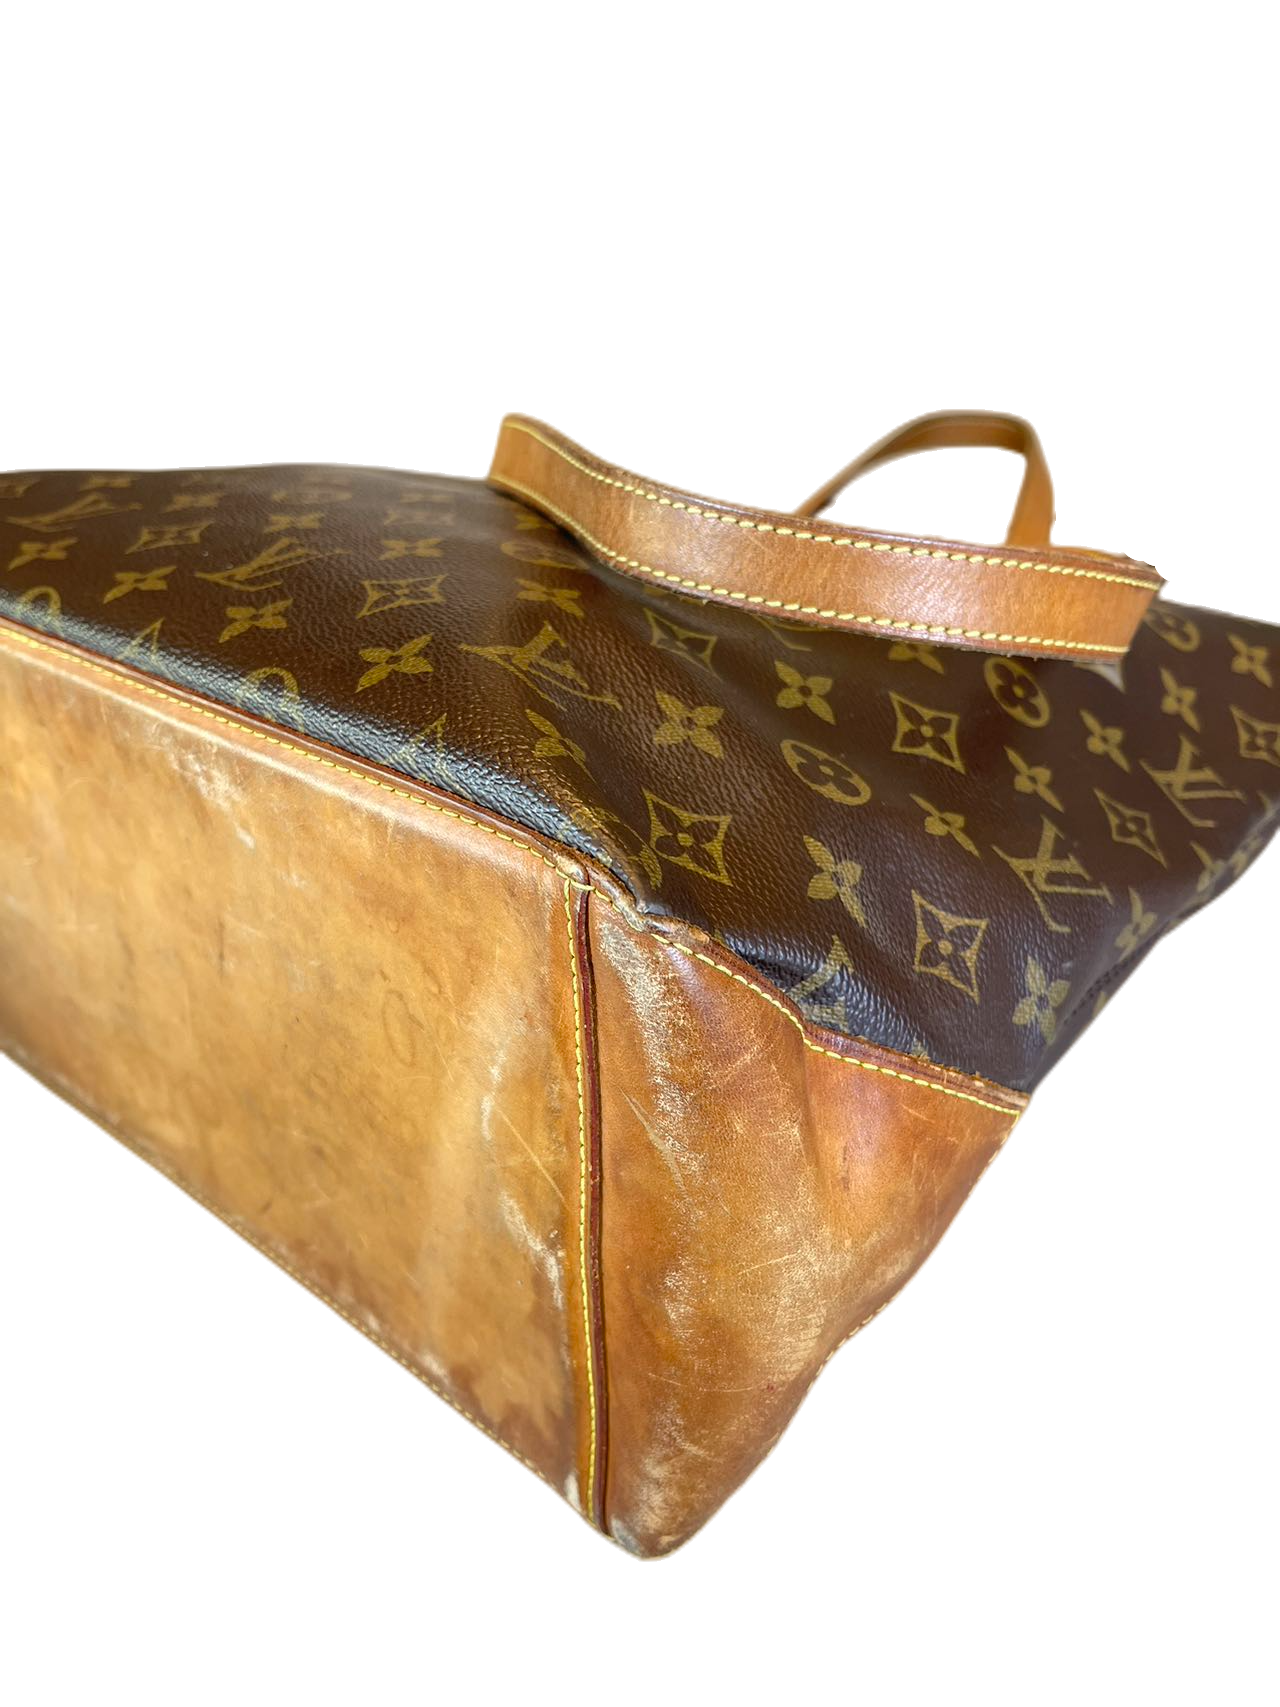 Preloved Louis Vuitton Monogram Canvas Vintage Shoulder Bag Totes